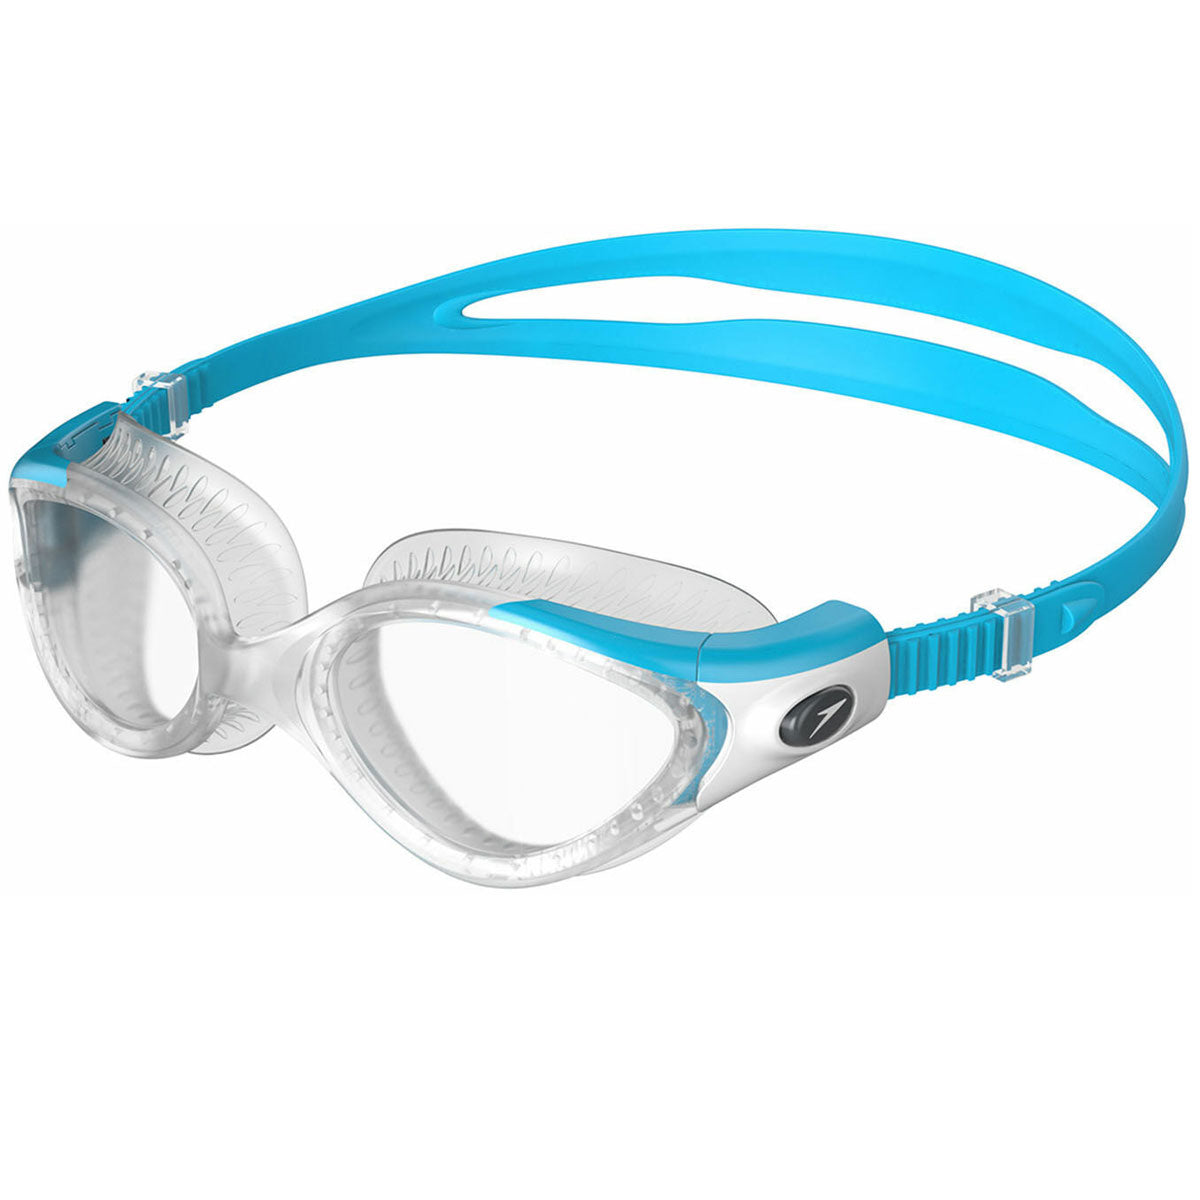 Speedo Futura Biofuse Flexiseal Goggles - Womens - Turquoise/Clear